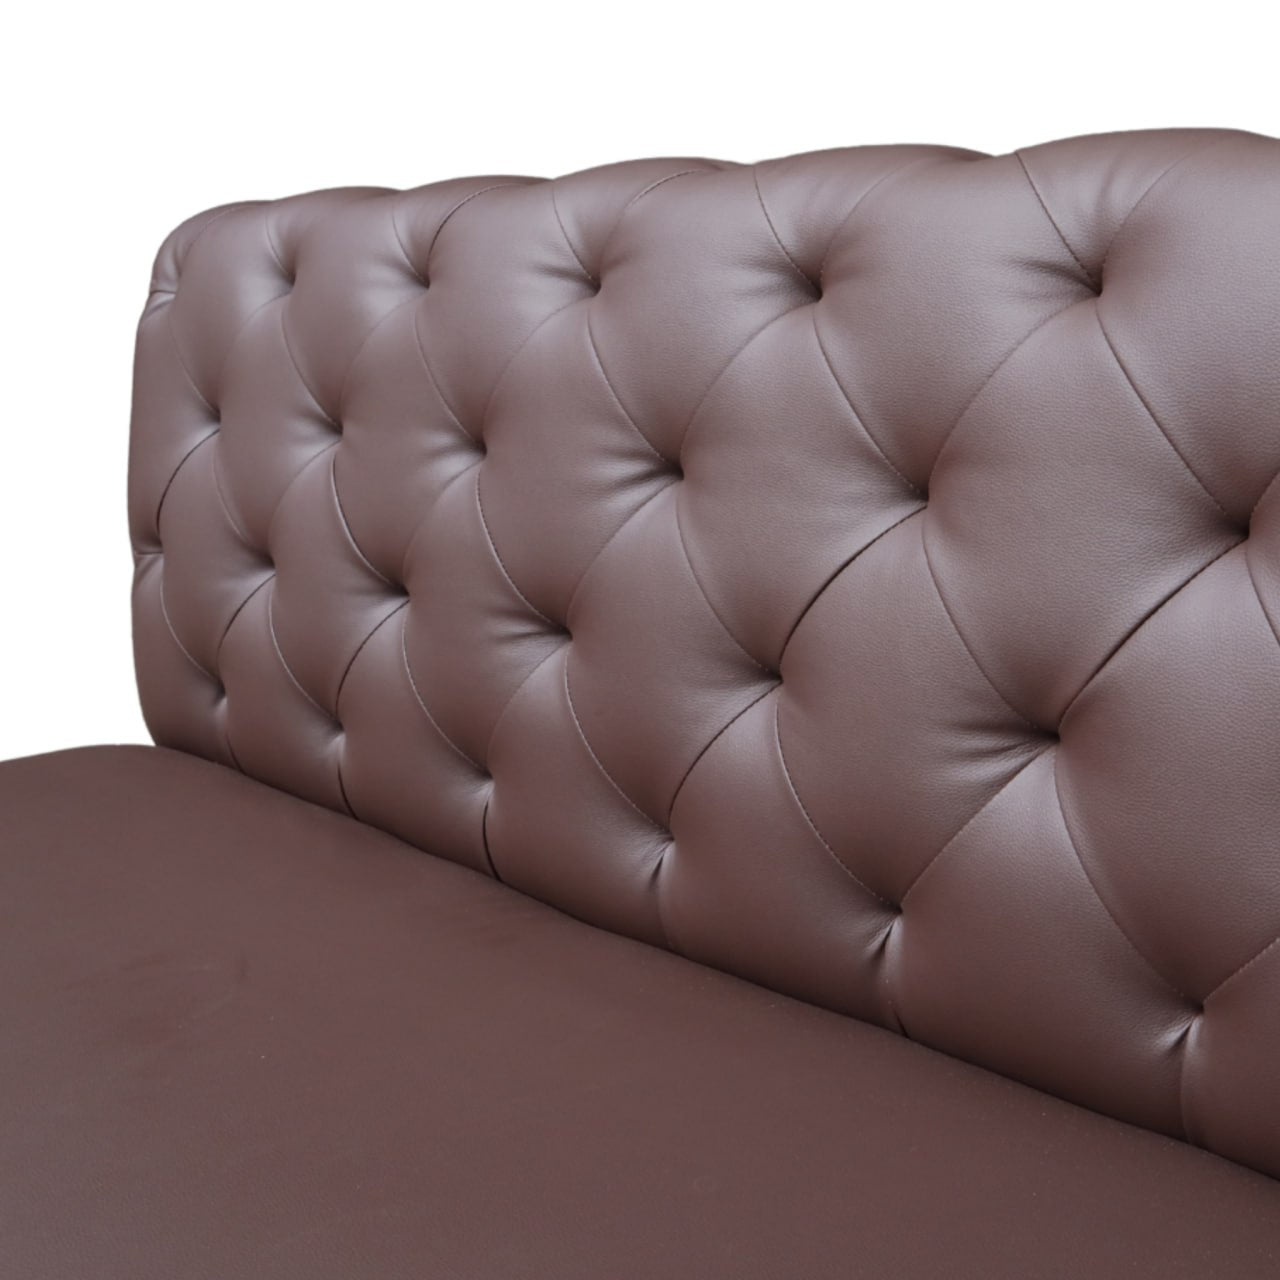 BERNARD Armless Fabric Couch AF Home